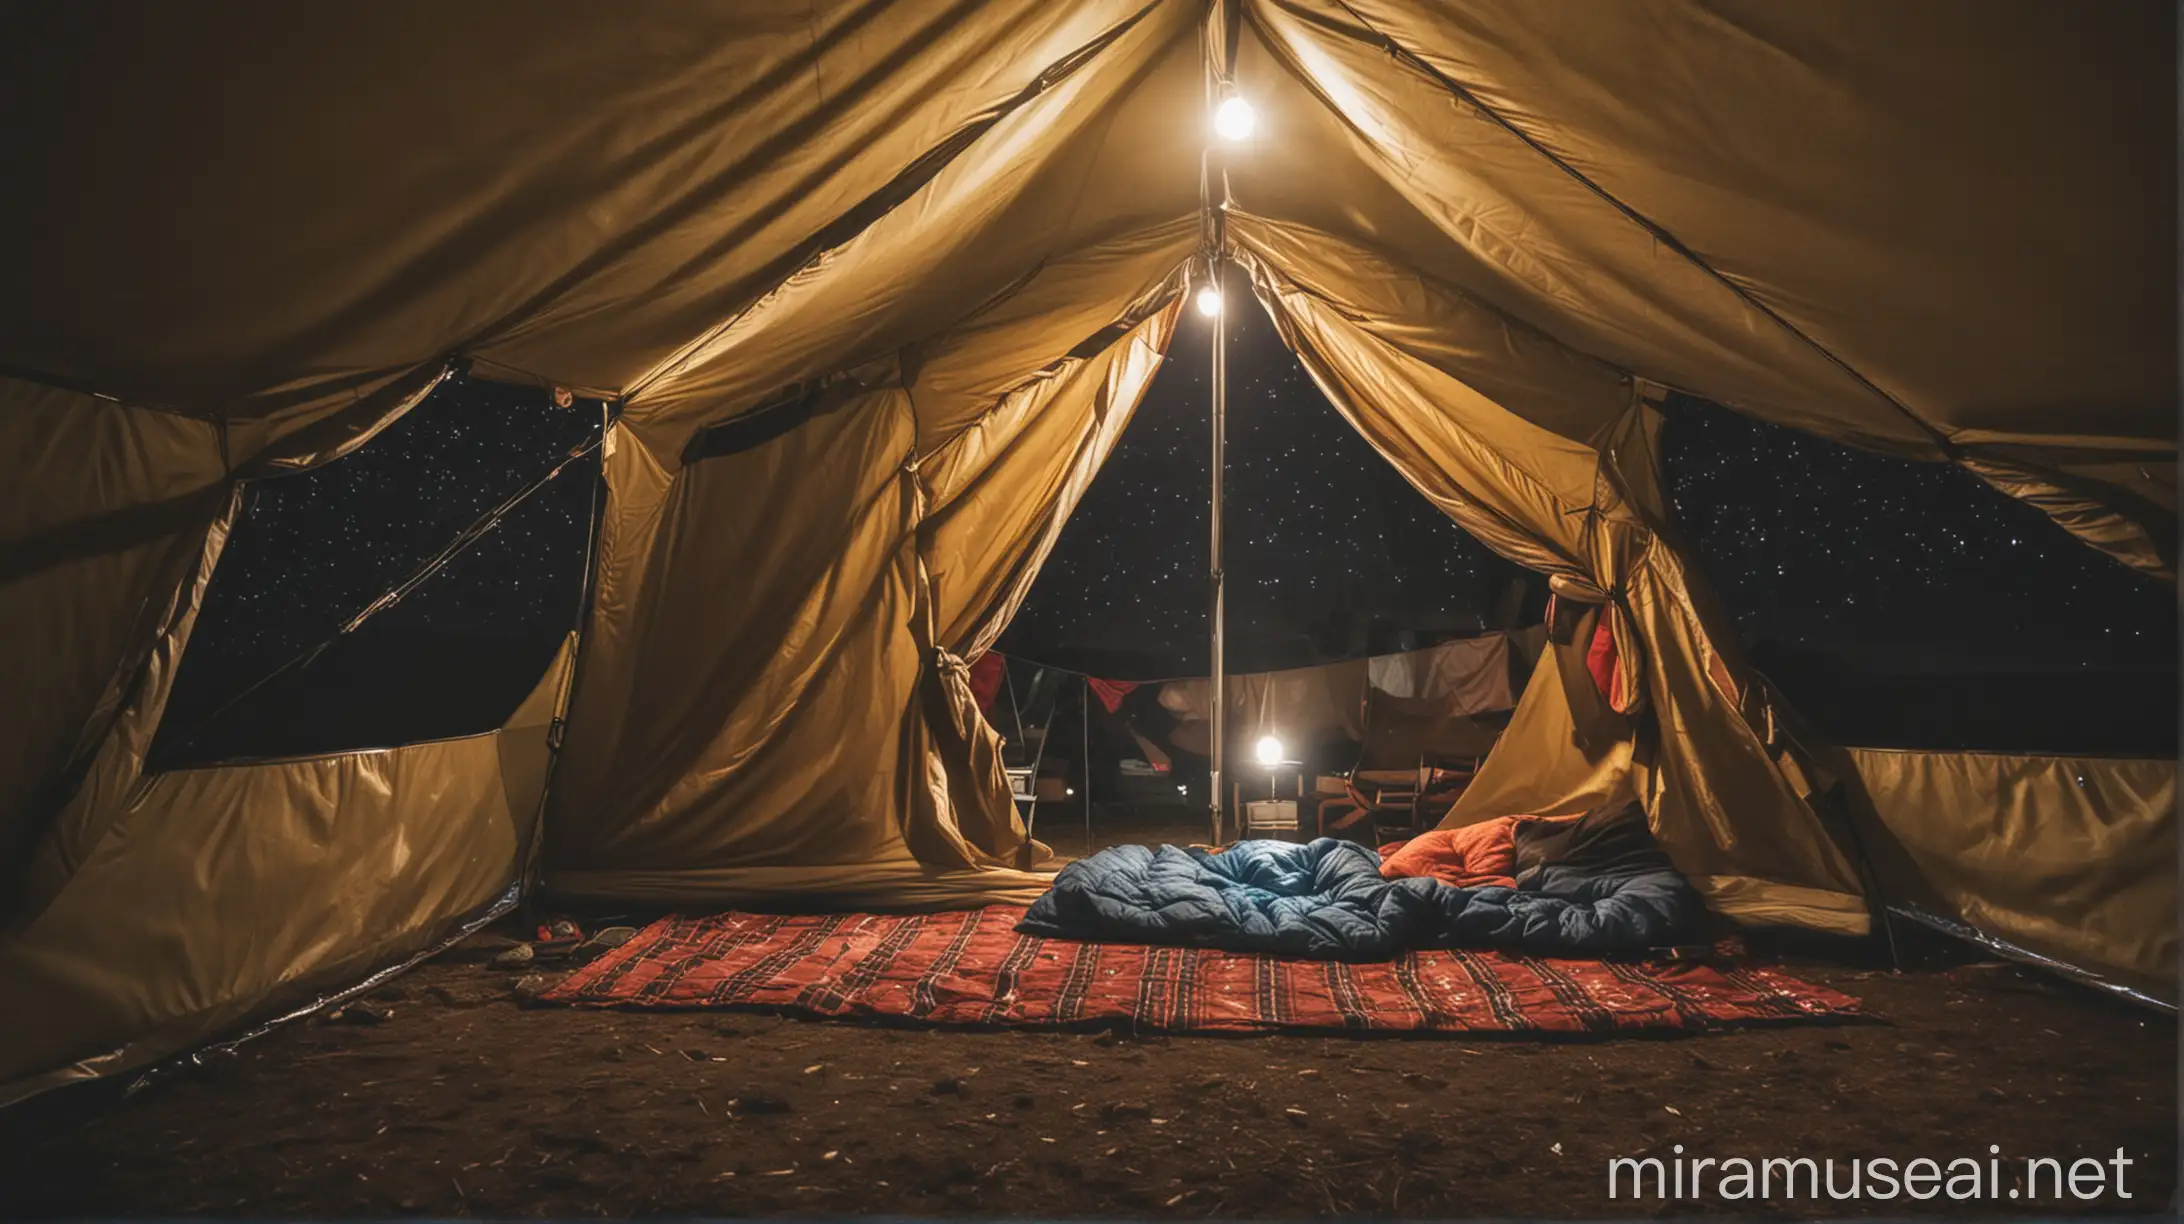 Bright Night Camping Tent Illuminated by Campfire